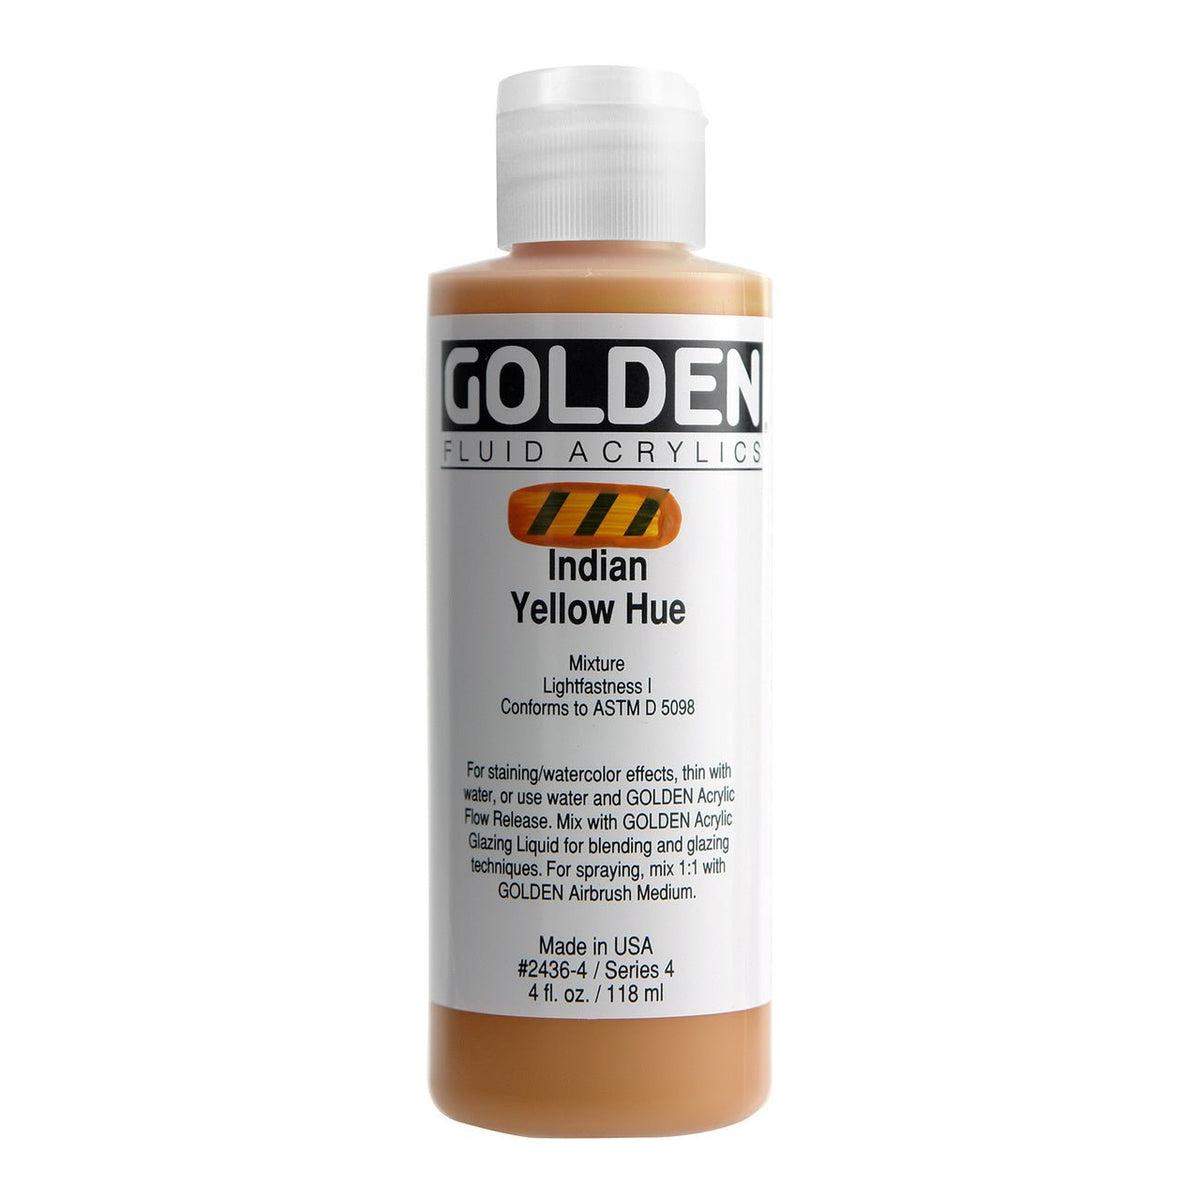 Golden Fluid Acrylic India Yellow Hue 4 oz - merriartist.com